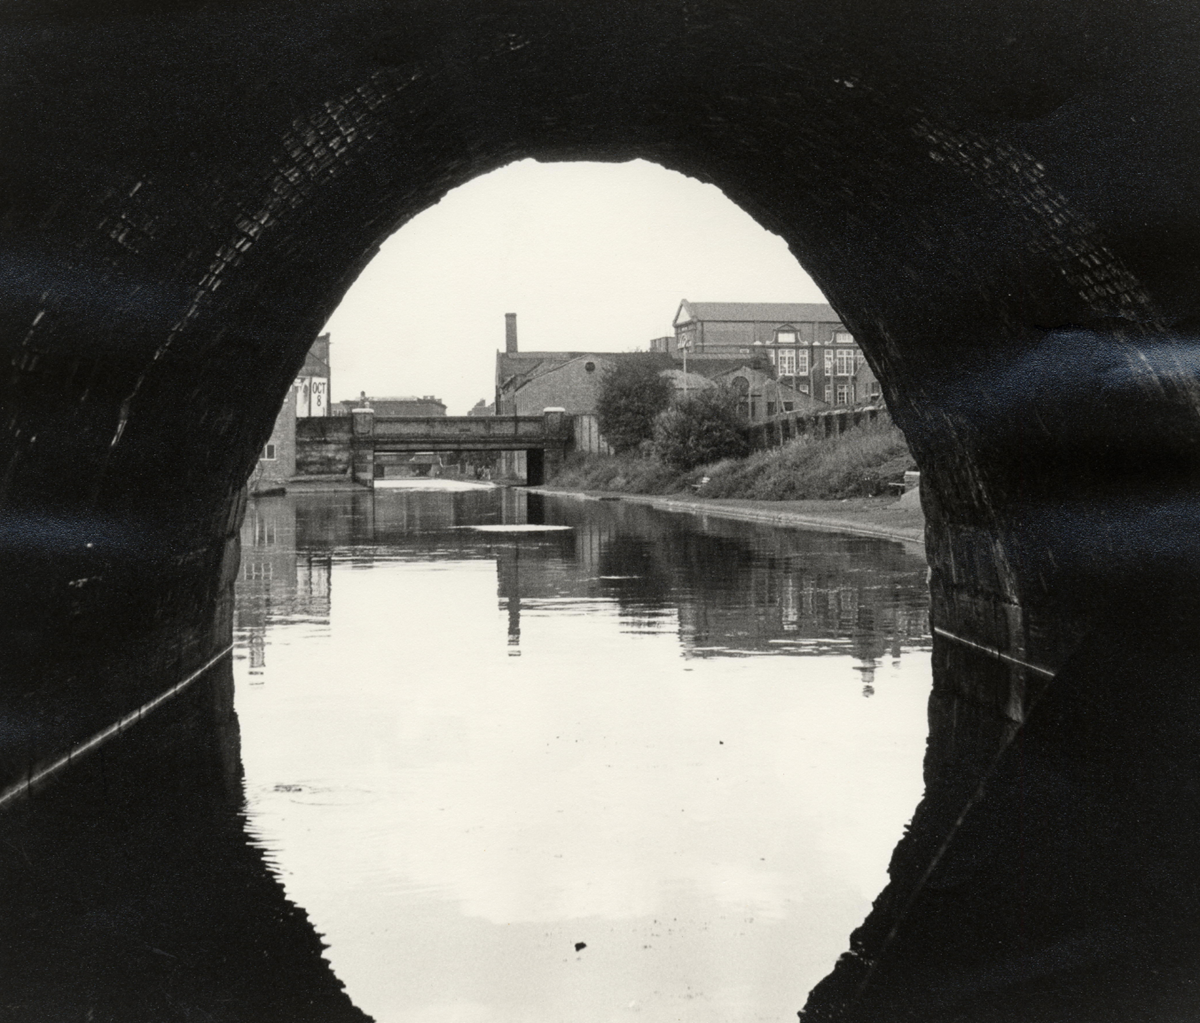 Thornhill Bridge from Islington Tunnel, 1973. Credit: Islington Local History Centre